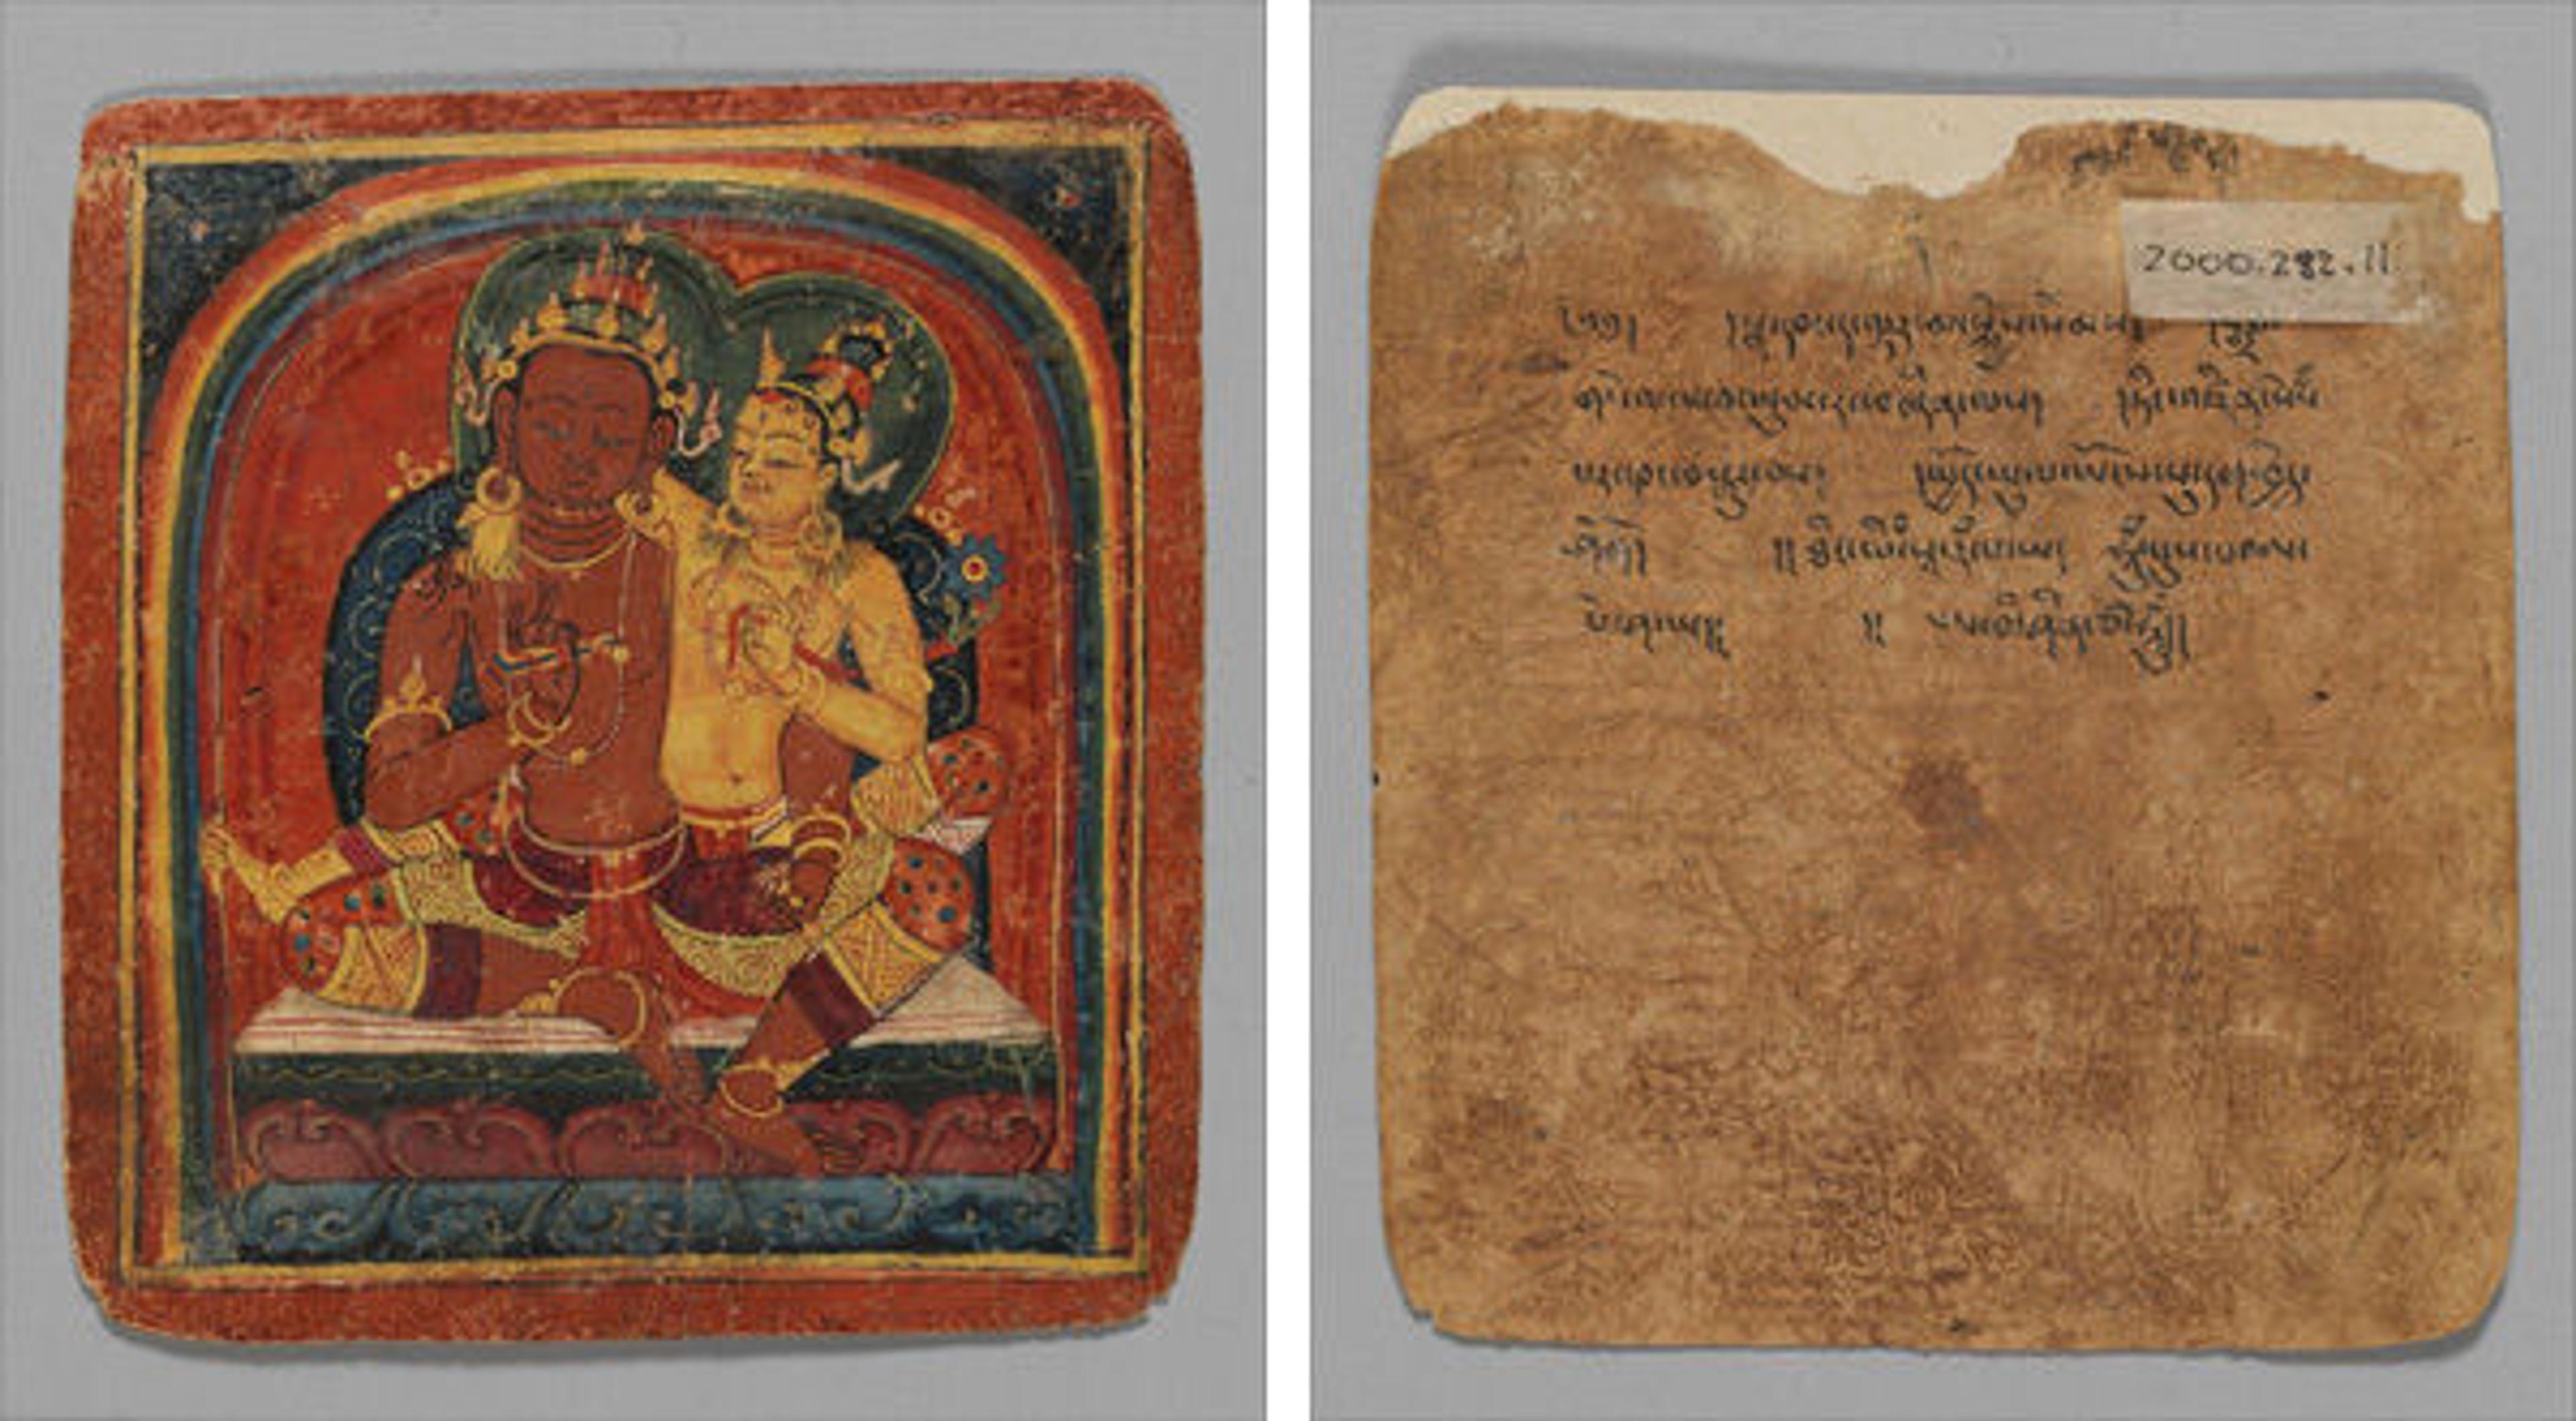 Initiation Card (Tsakalis), early 15th century. Tibet. 2000.282.11